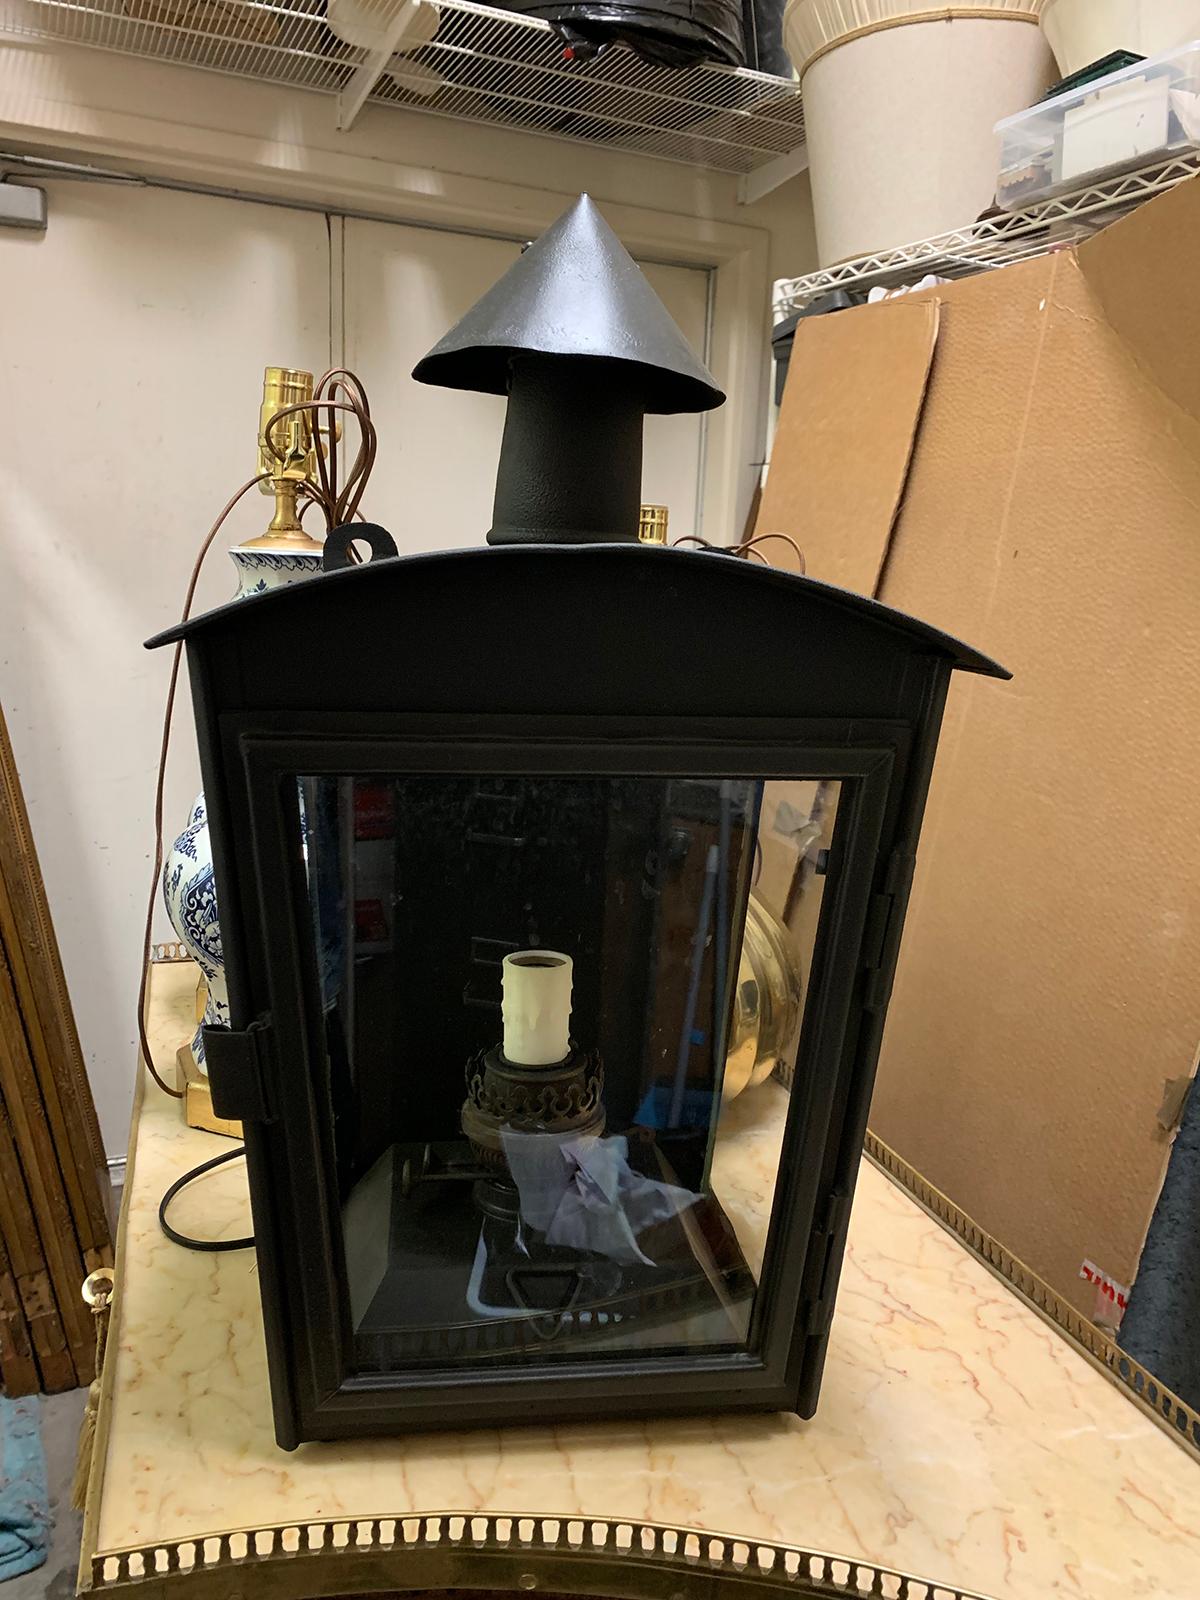 Single painted wall mount tole lantern, one light, circa 1910
Brand new wiring.